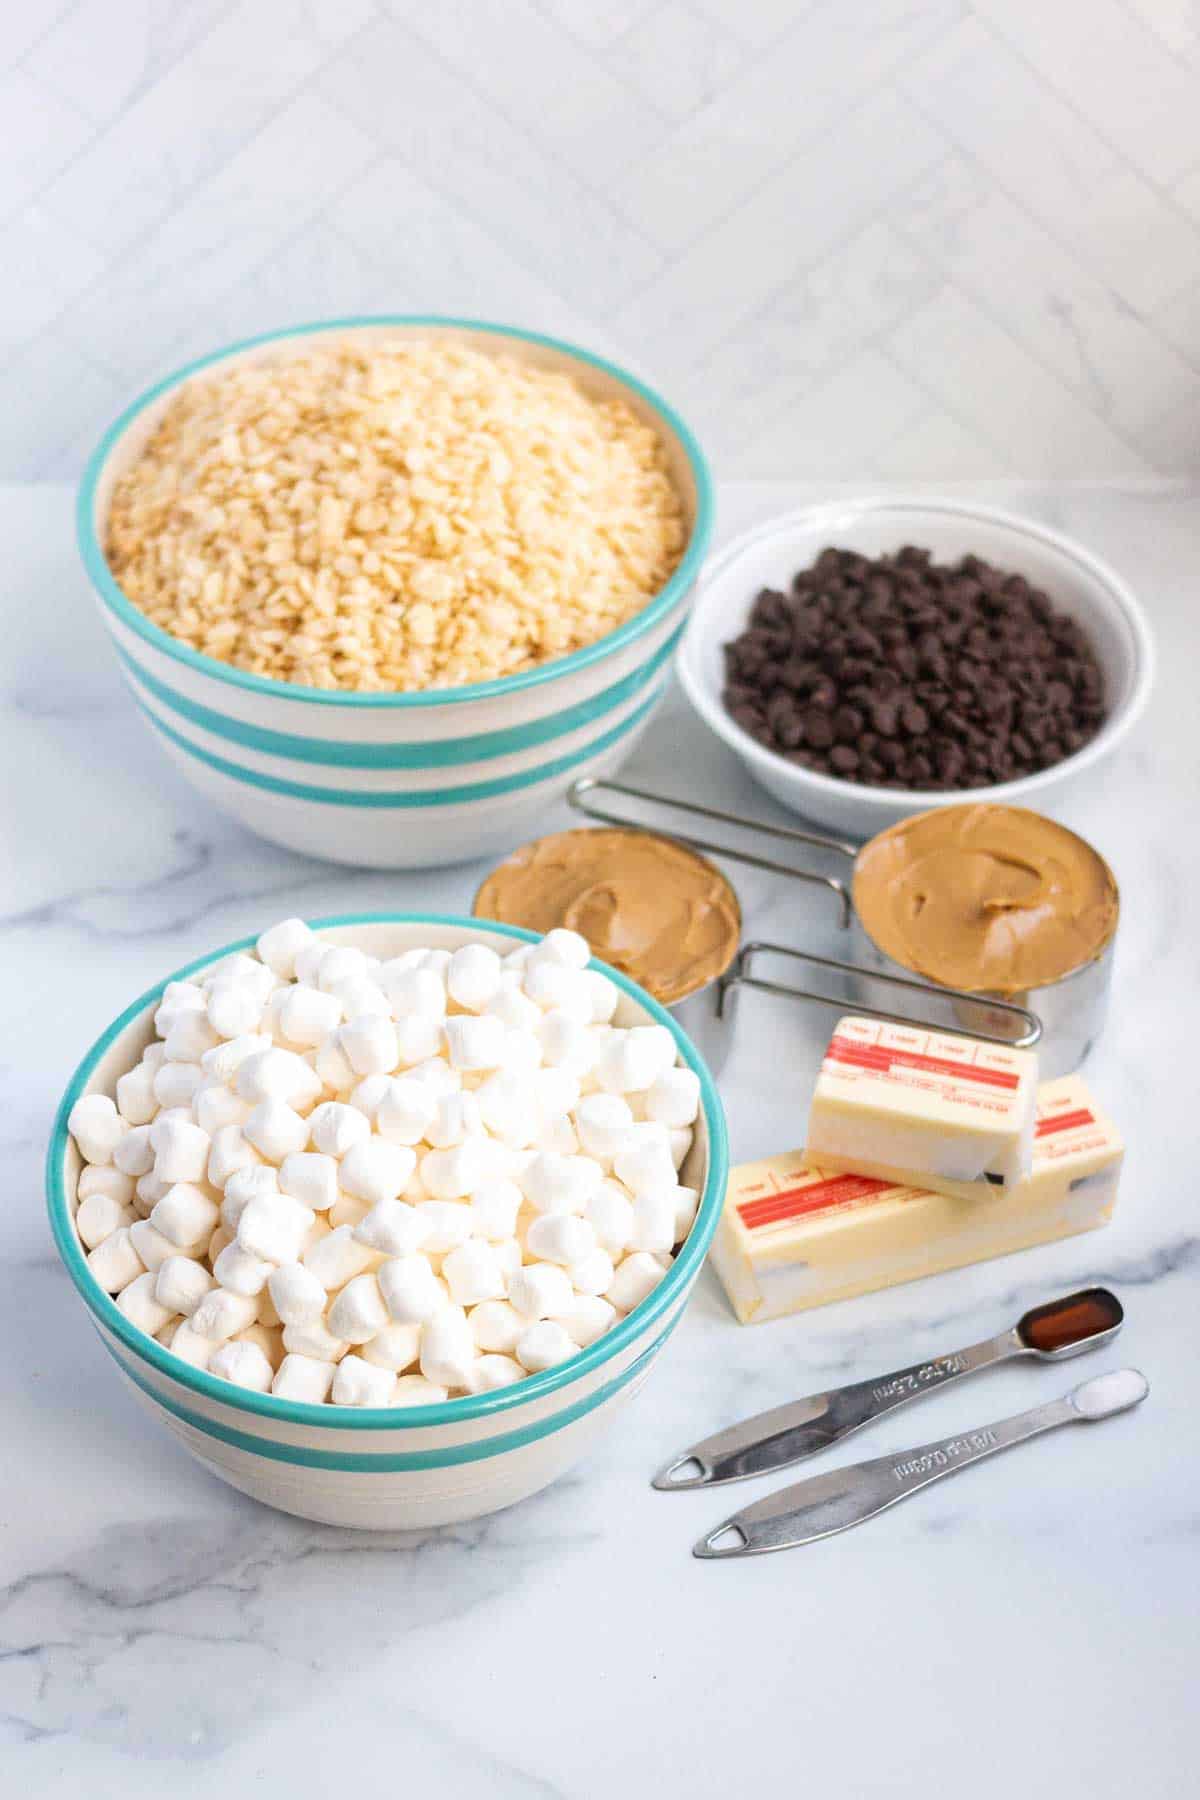 Chocolate peanut butter rice krispie ingredients: mini marshmallows, unsalted butter, vanilla extract, salt, creamy peanut butter, chocolate chips.